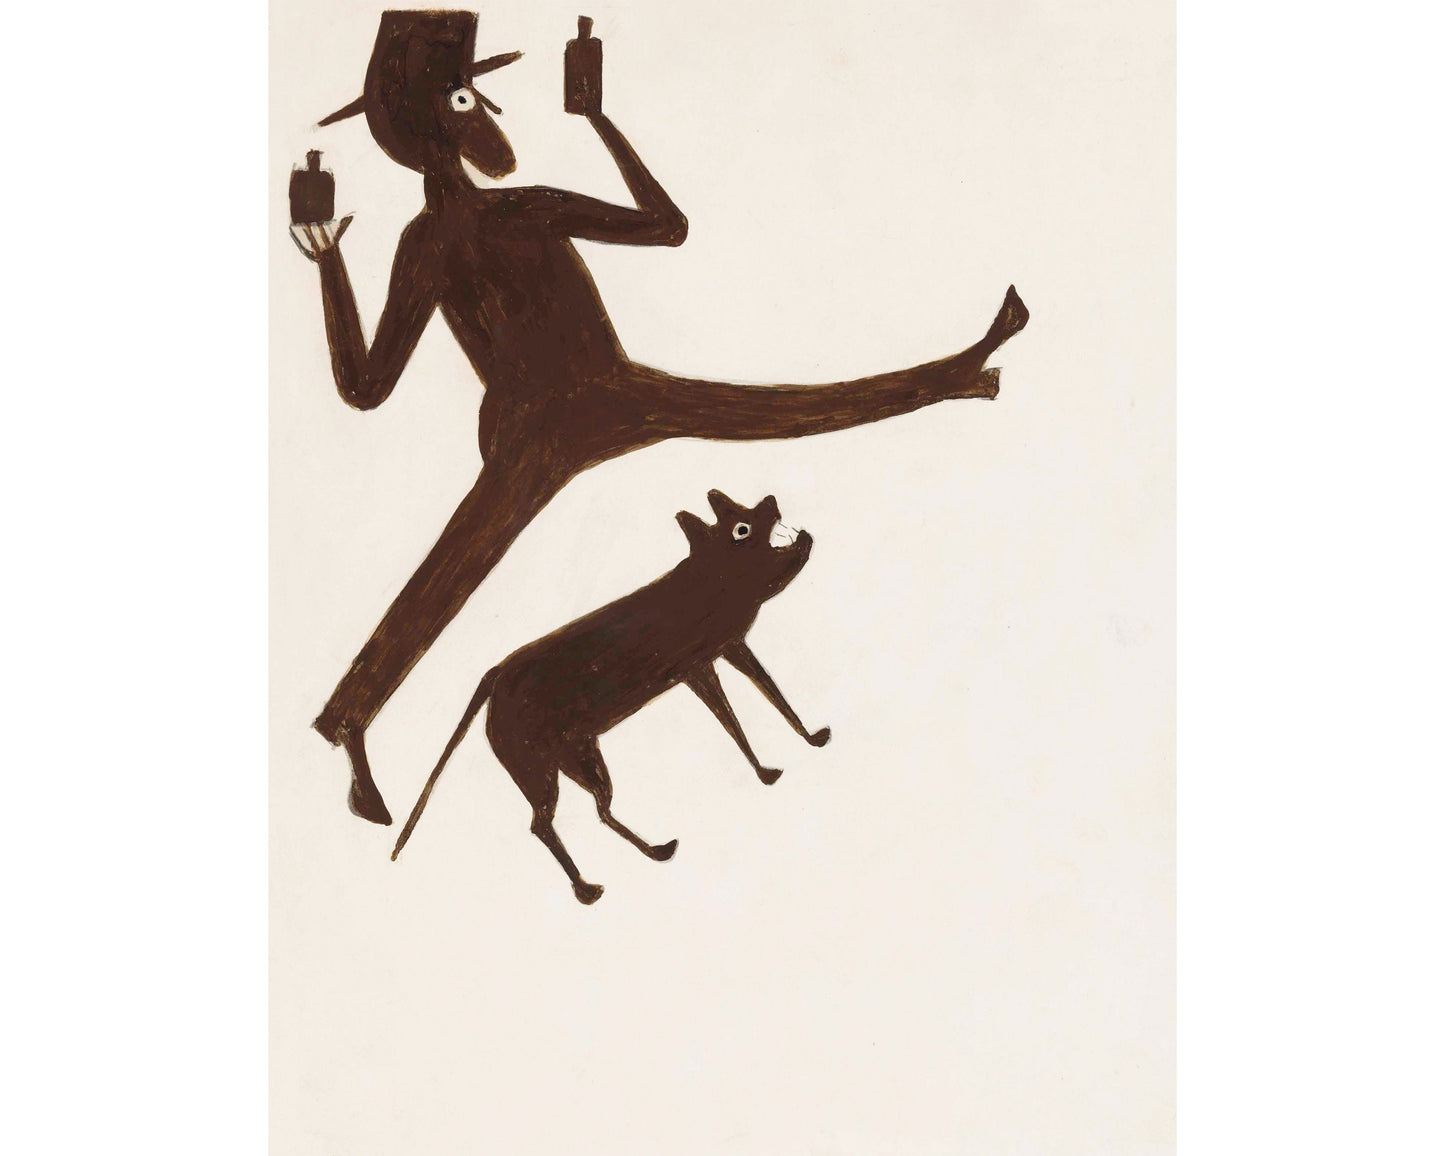 Bill Traylor Americana art | Drinking man and dog | Animal folk art | African American self-taught artist | Modern vintage wall décor